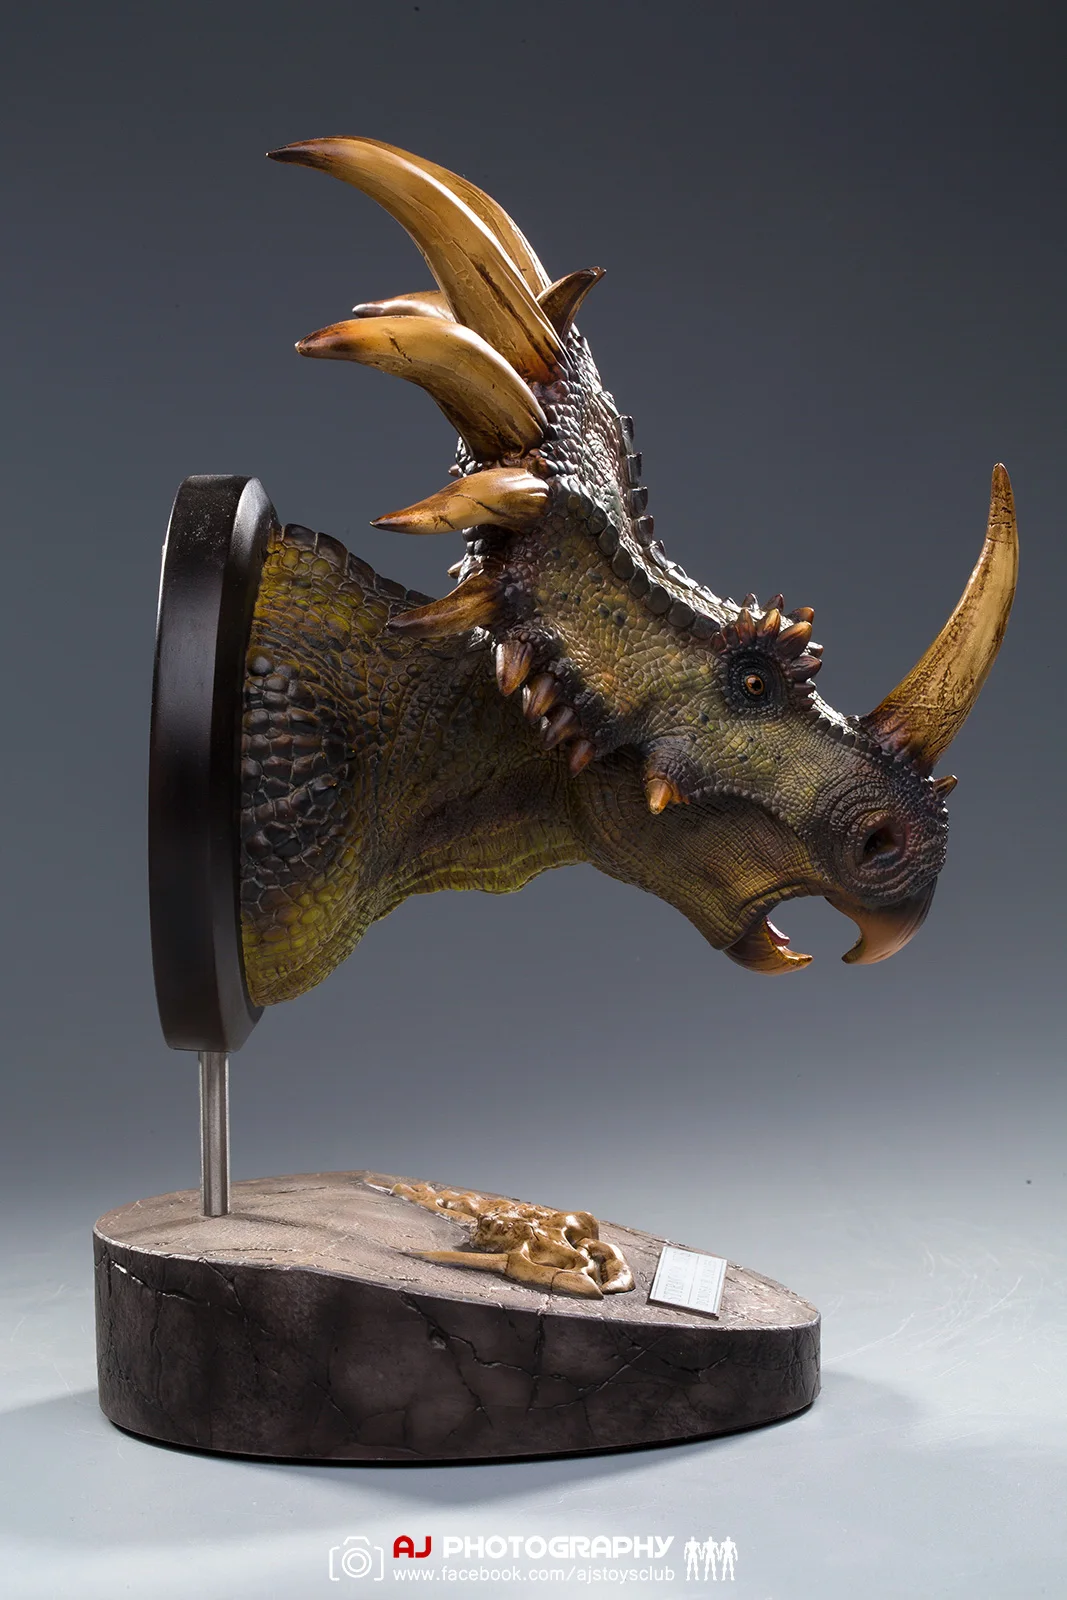 DAMTOYS Styracosaurus Statuie Agățat de Perete Paleontologie Lume Colectie Muzeul de Serie(NR.MUS004A/B) Aproximativ 26cm Mare